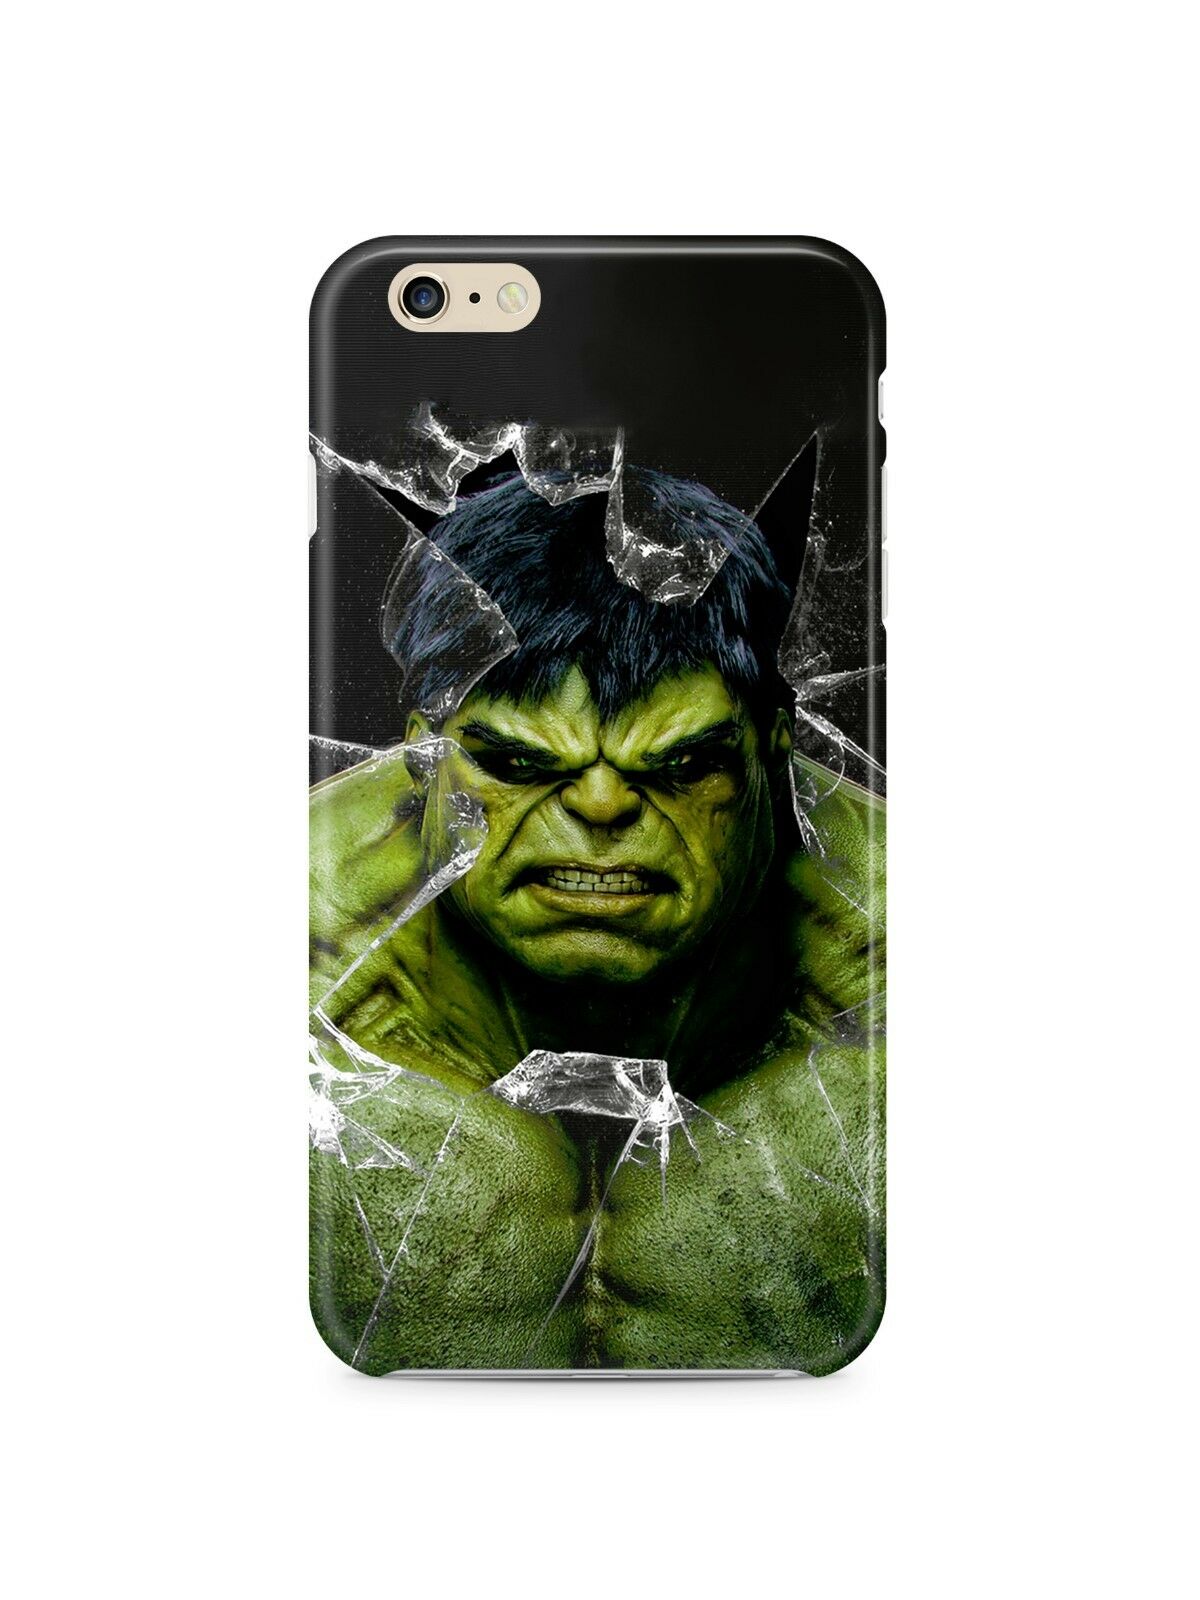 Incredible Hulk Superhero Marvel Iphone 4s 5s 6 7 8 X XS Max XR 11 Pro Plus Case caselegendcaselegend 